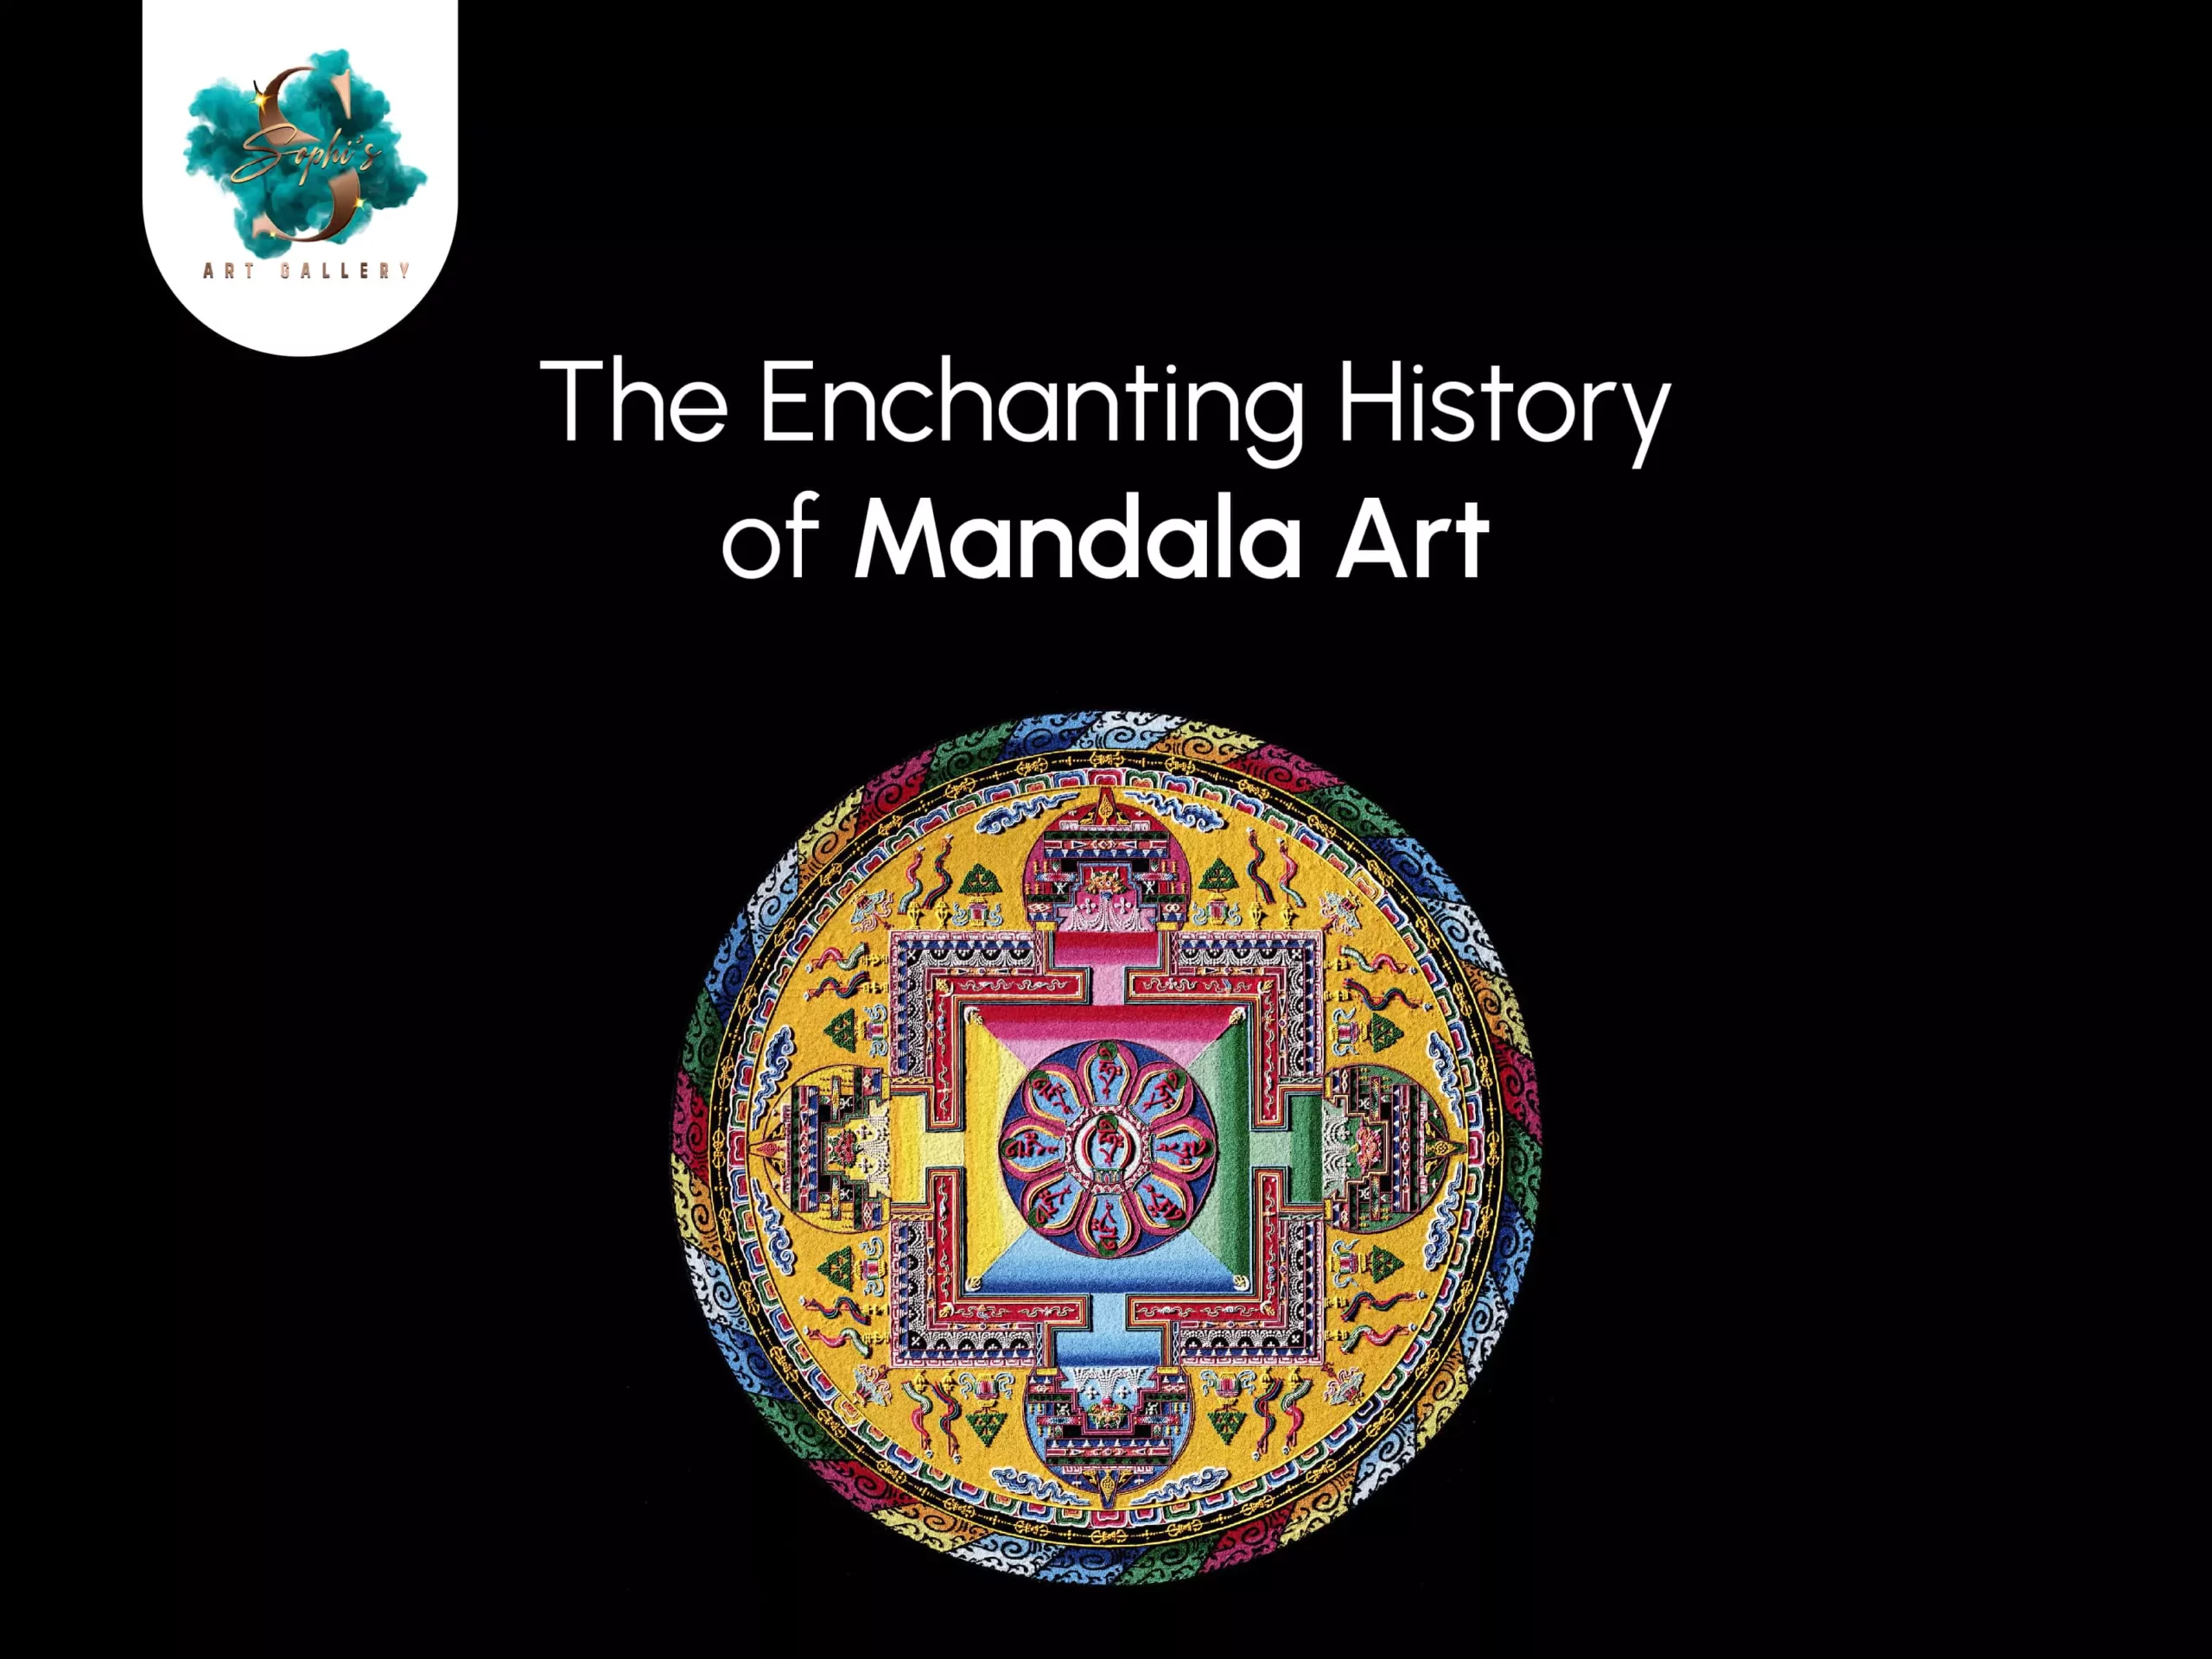 The Enchanting History of Mandala Art